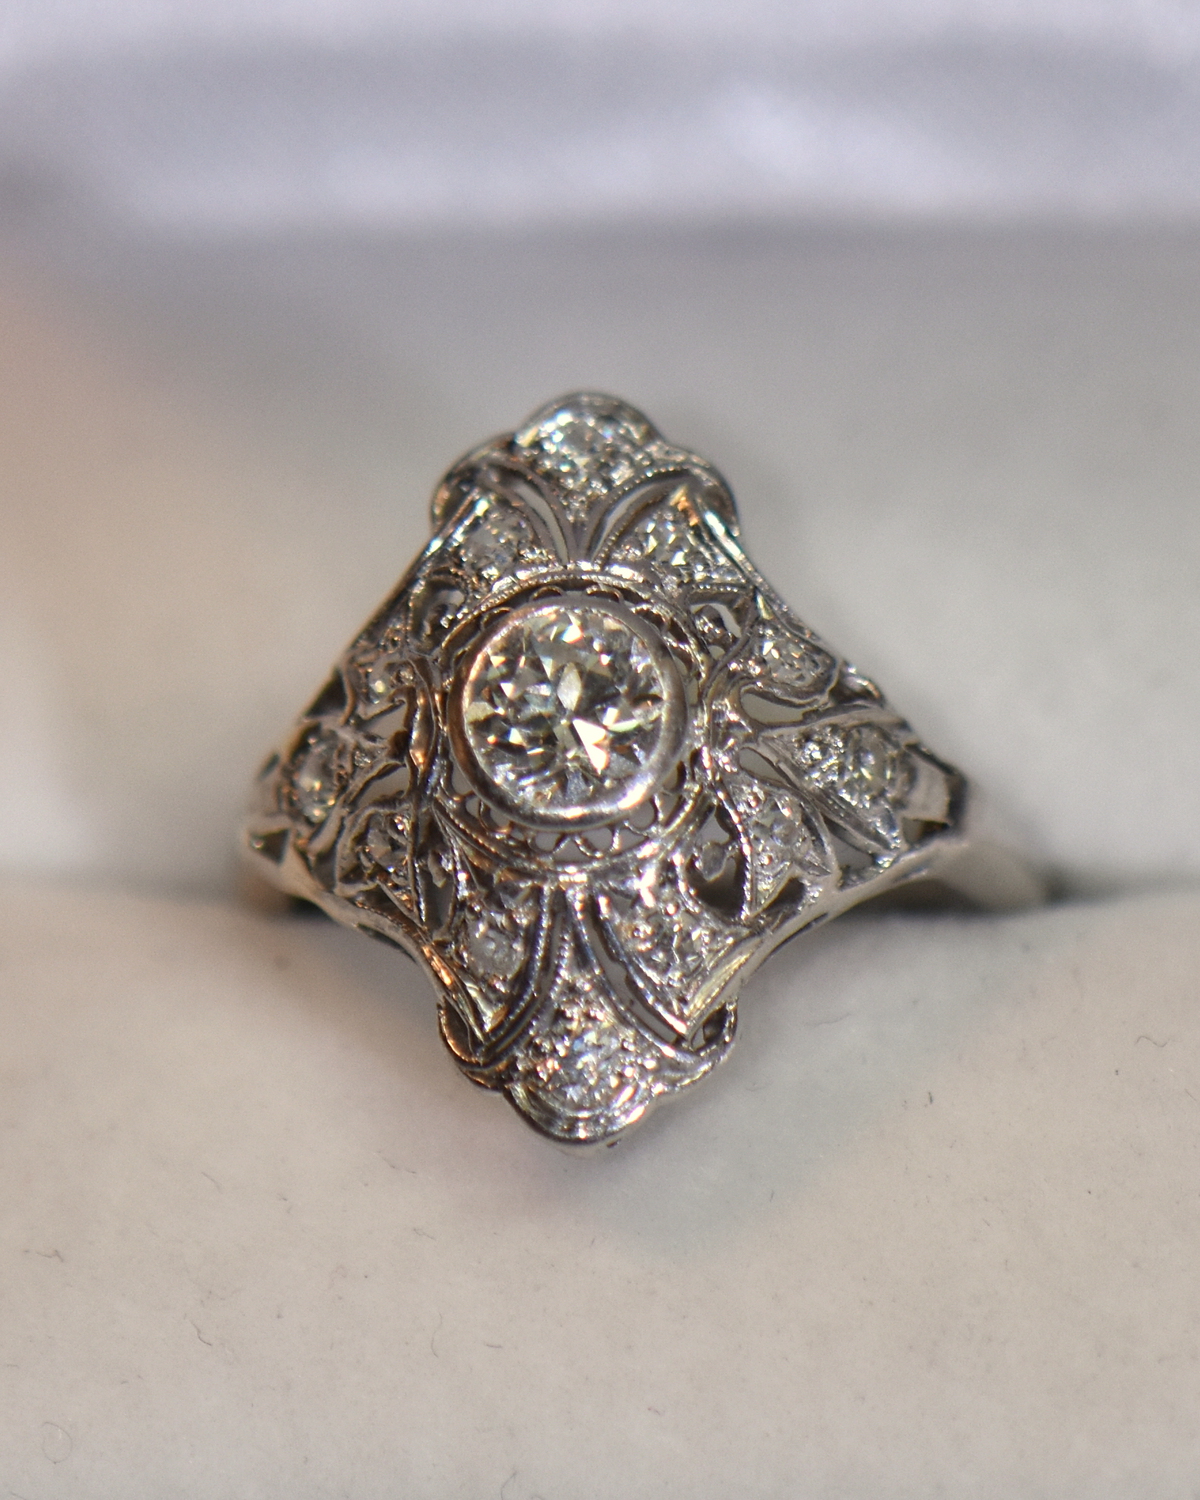 Platinum Engagement Rings | Tanishq Online Store